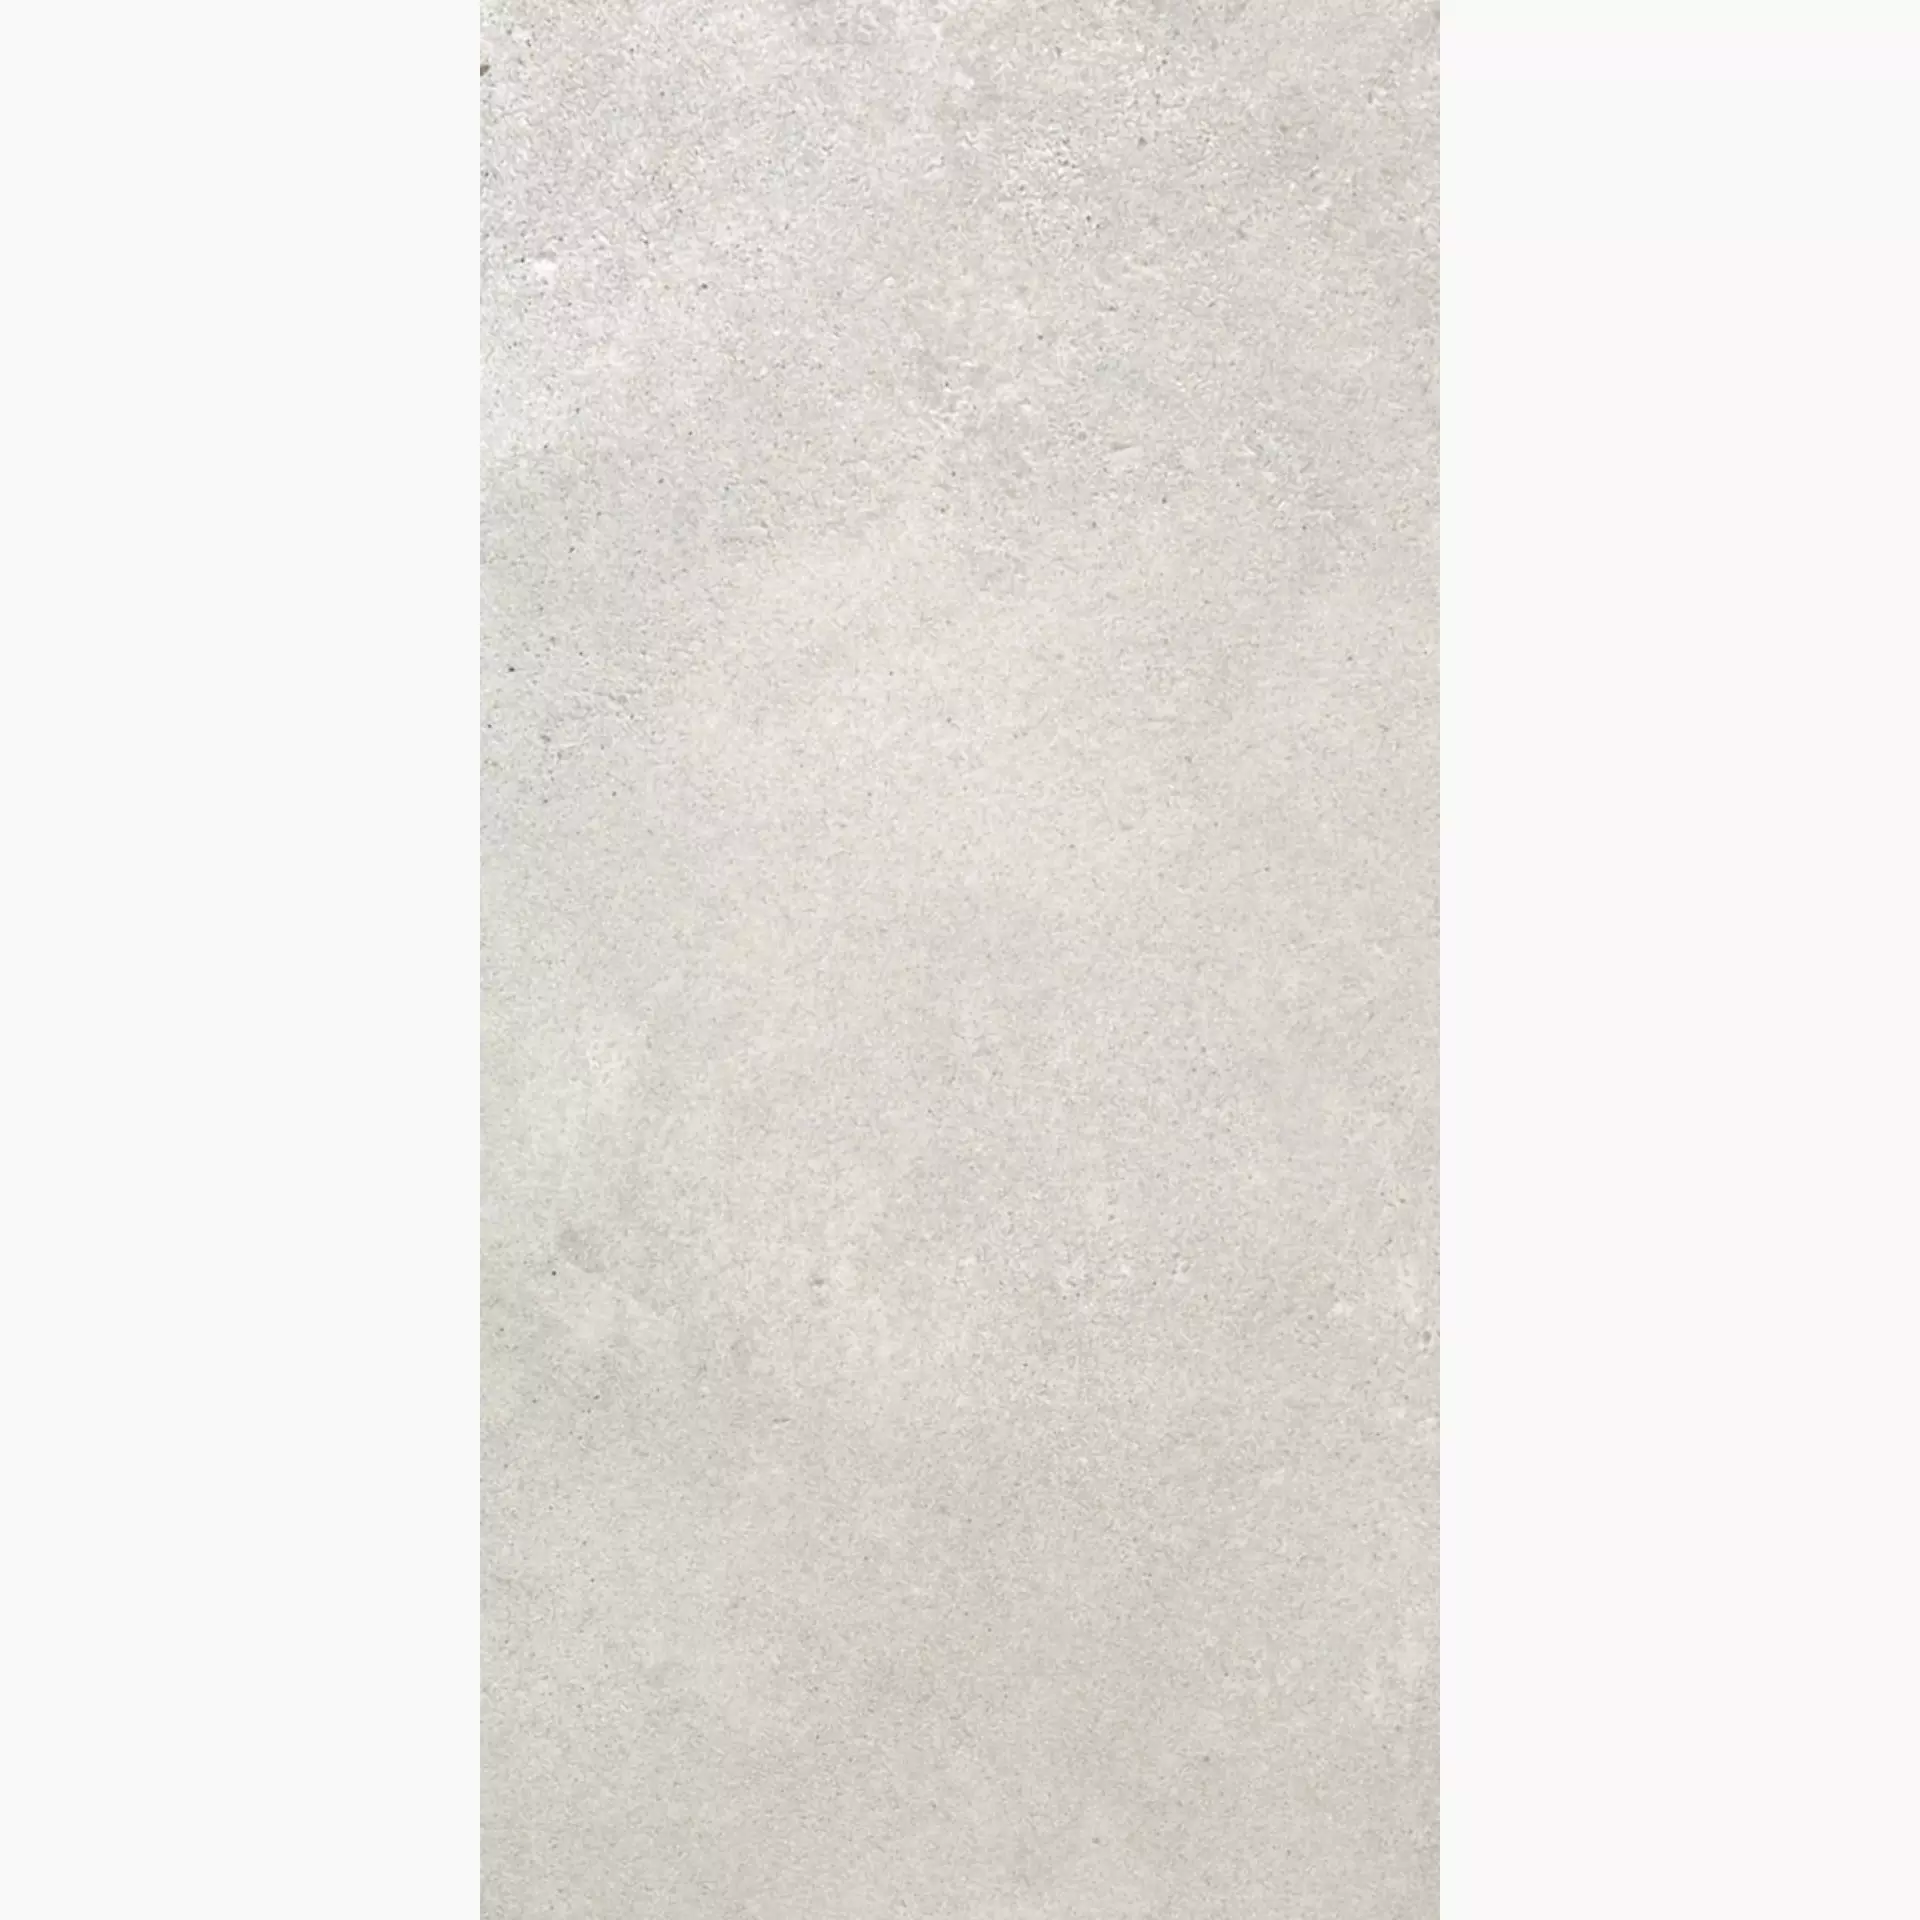 Rondine Loft White Naturale J89022 30x60cm rectified 8,5mm